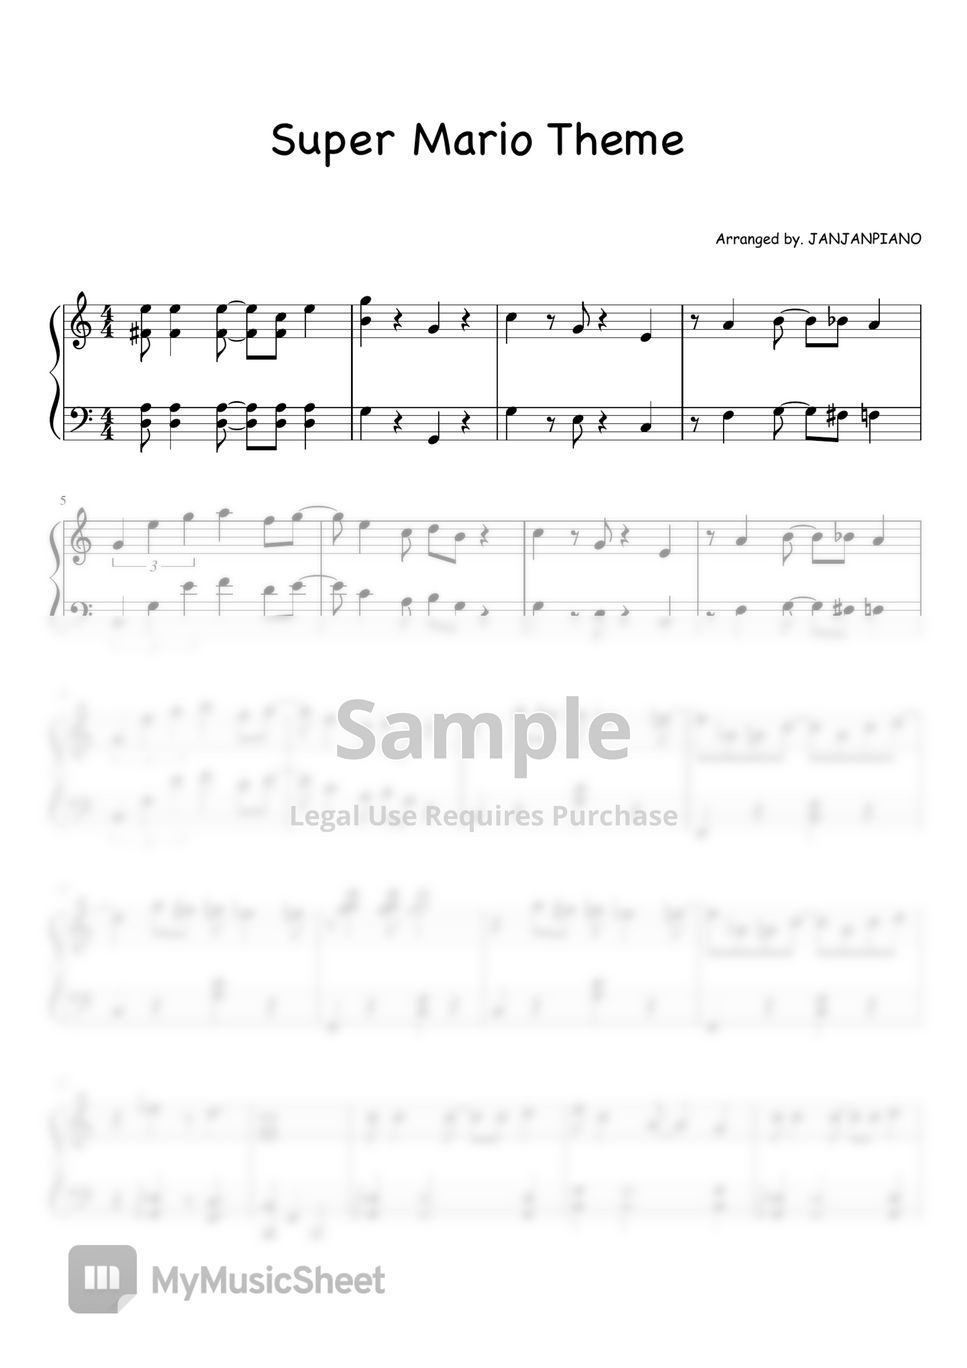 Super Mario OST - Super Mario Main Theme (Easy piano) by JanJanPiano